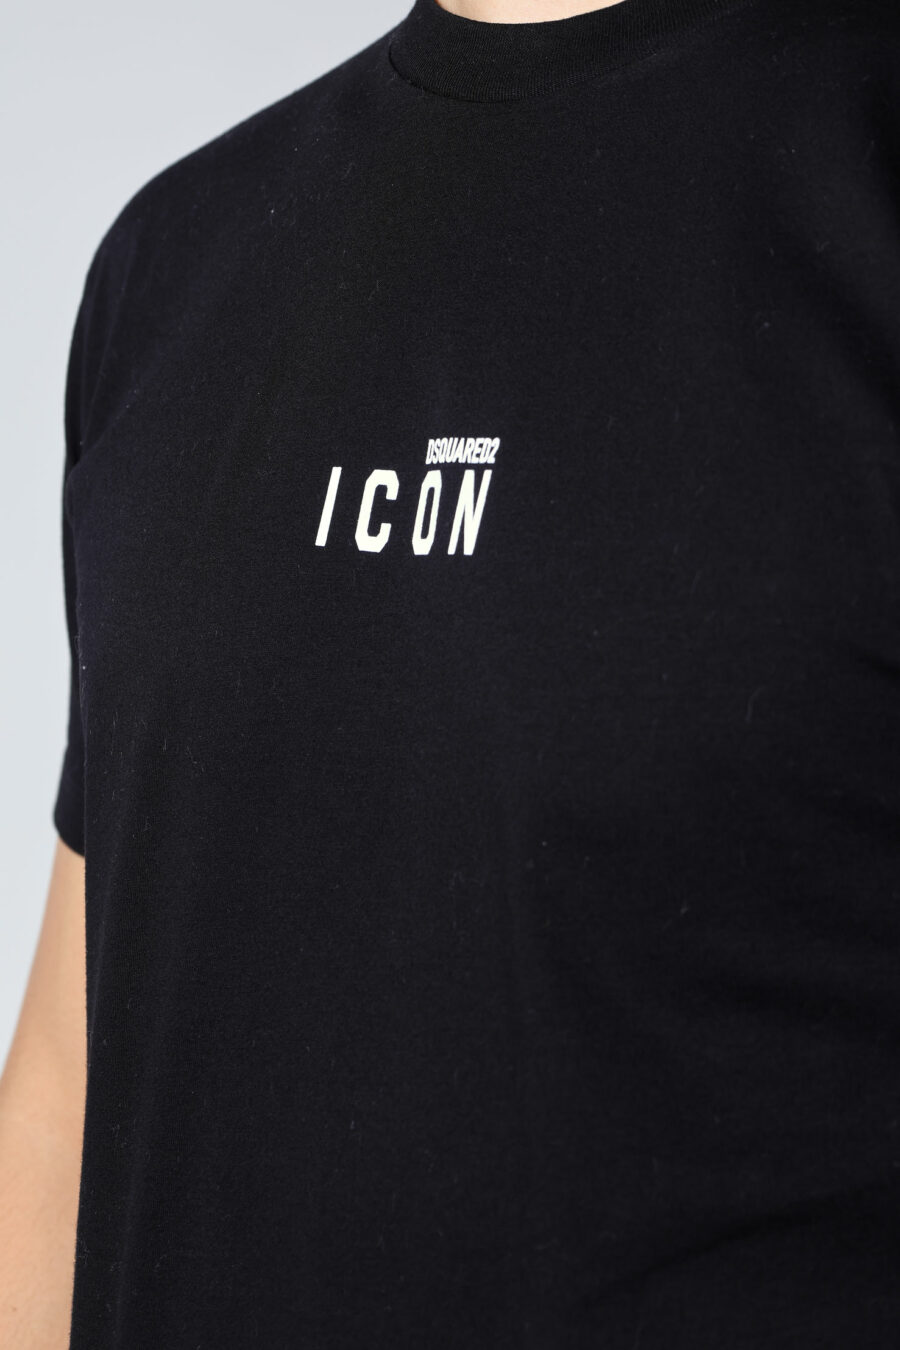 T-shirt preta com minilogo "icon" - Untitled Catalog 05663